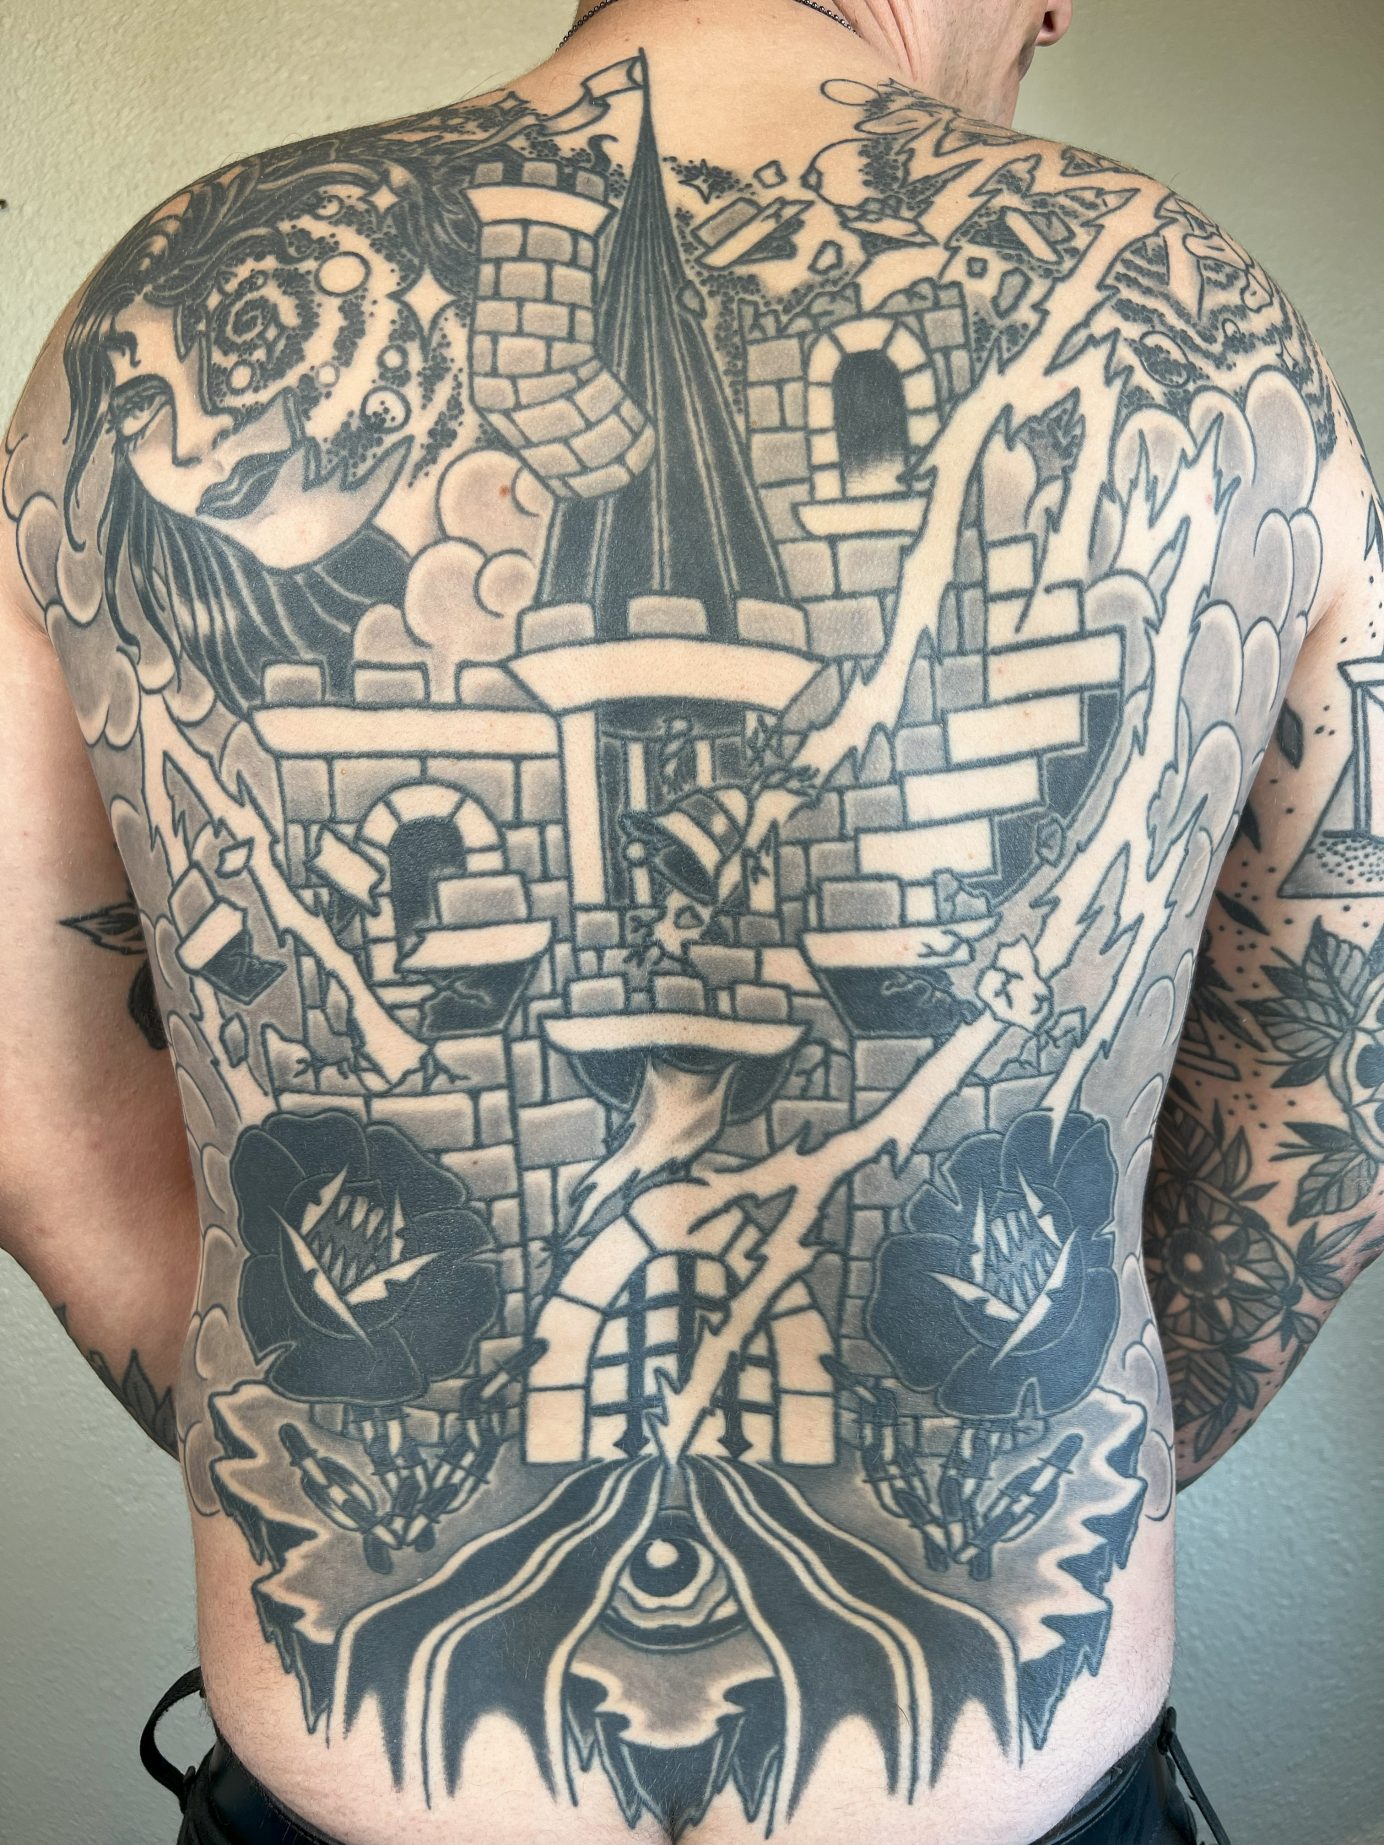 Crumbling Castle Backpiece tattoo by Jake B